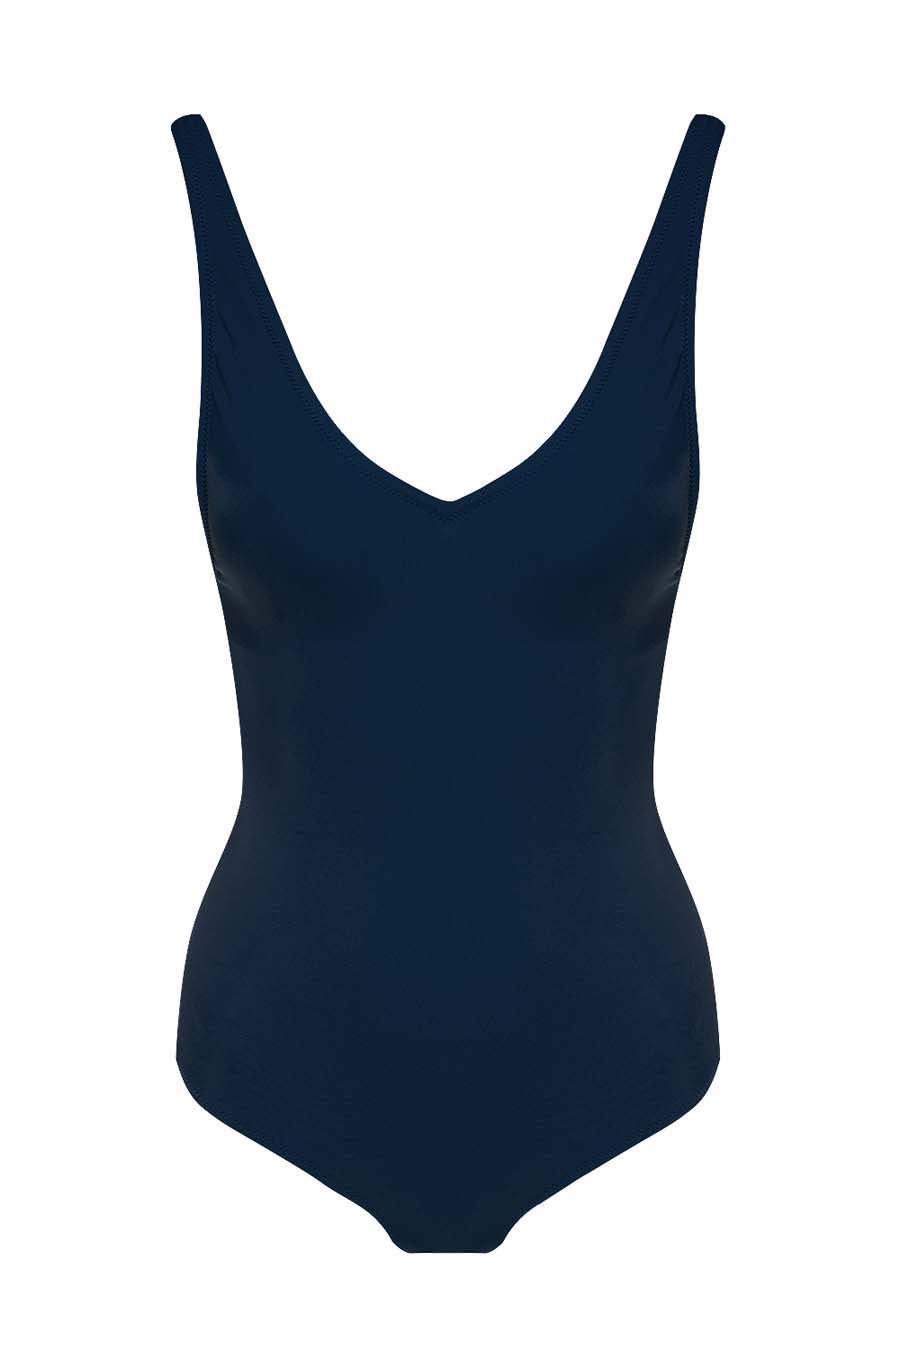 Belle Navy Blue Swimsuit